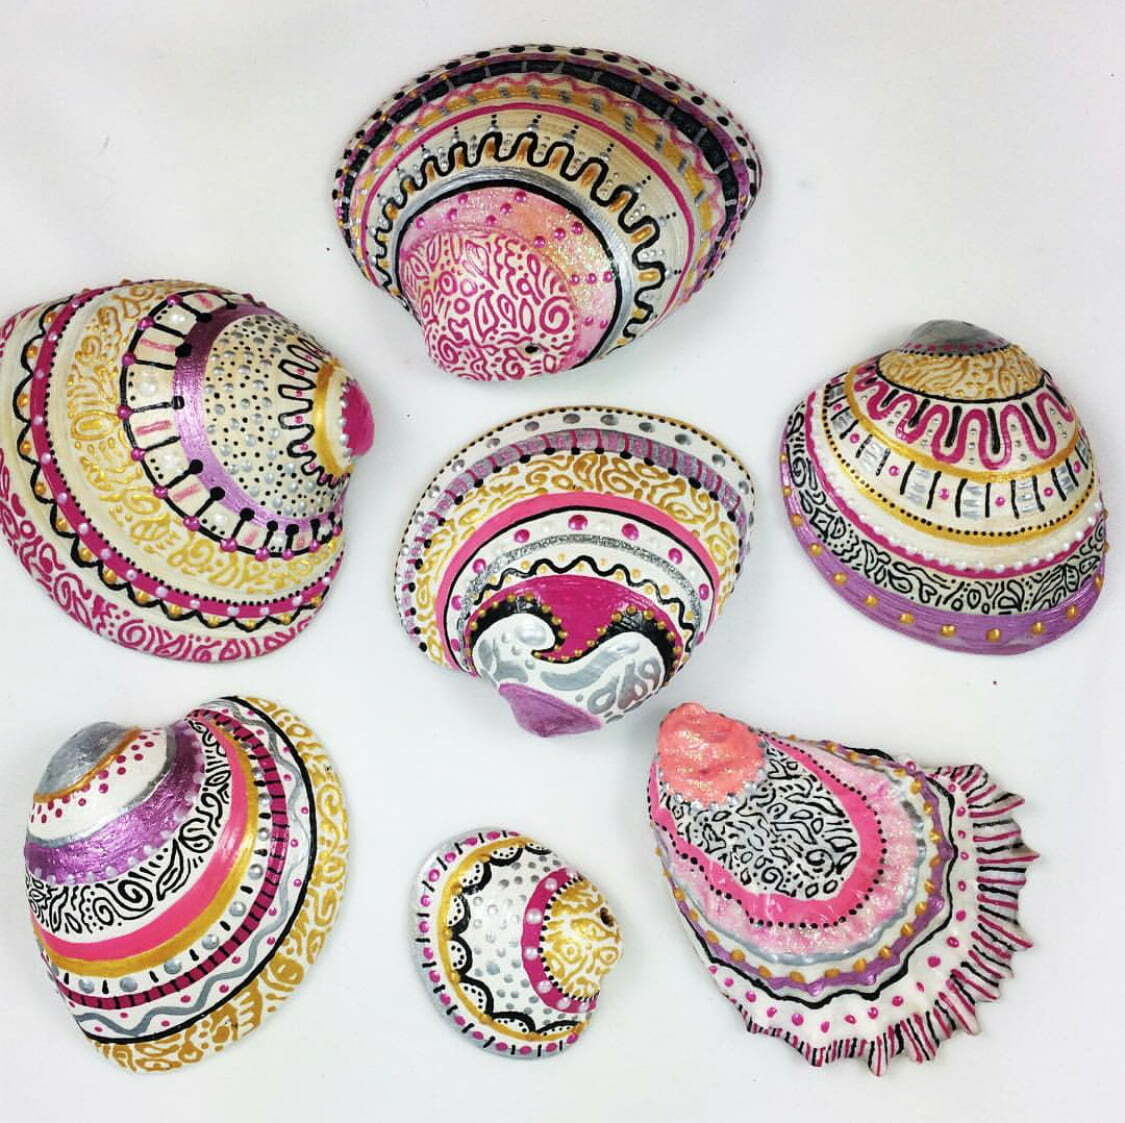 Colorful painted seashells